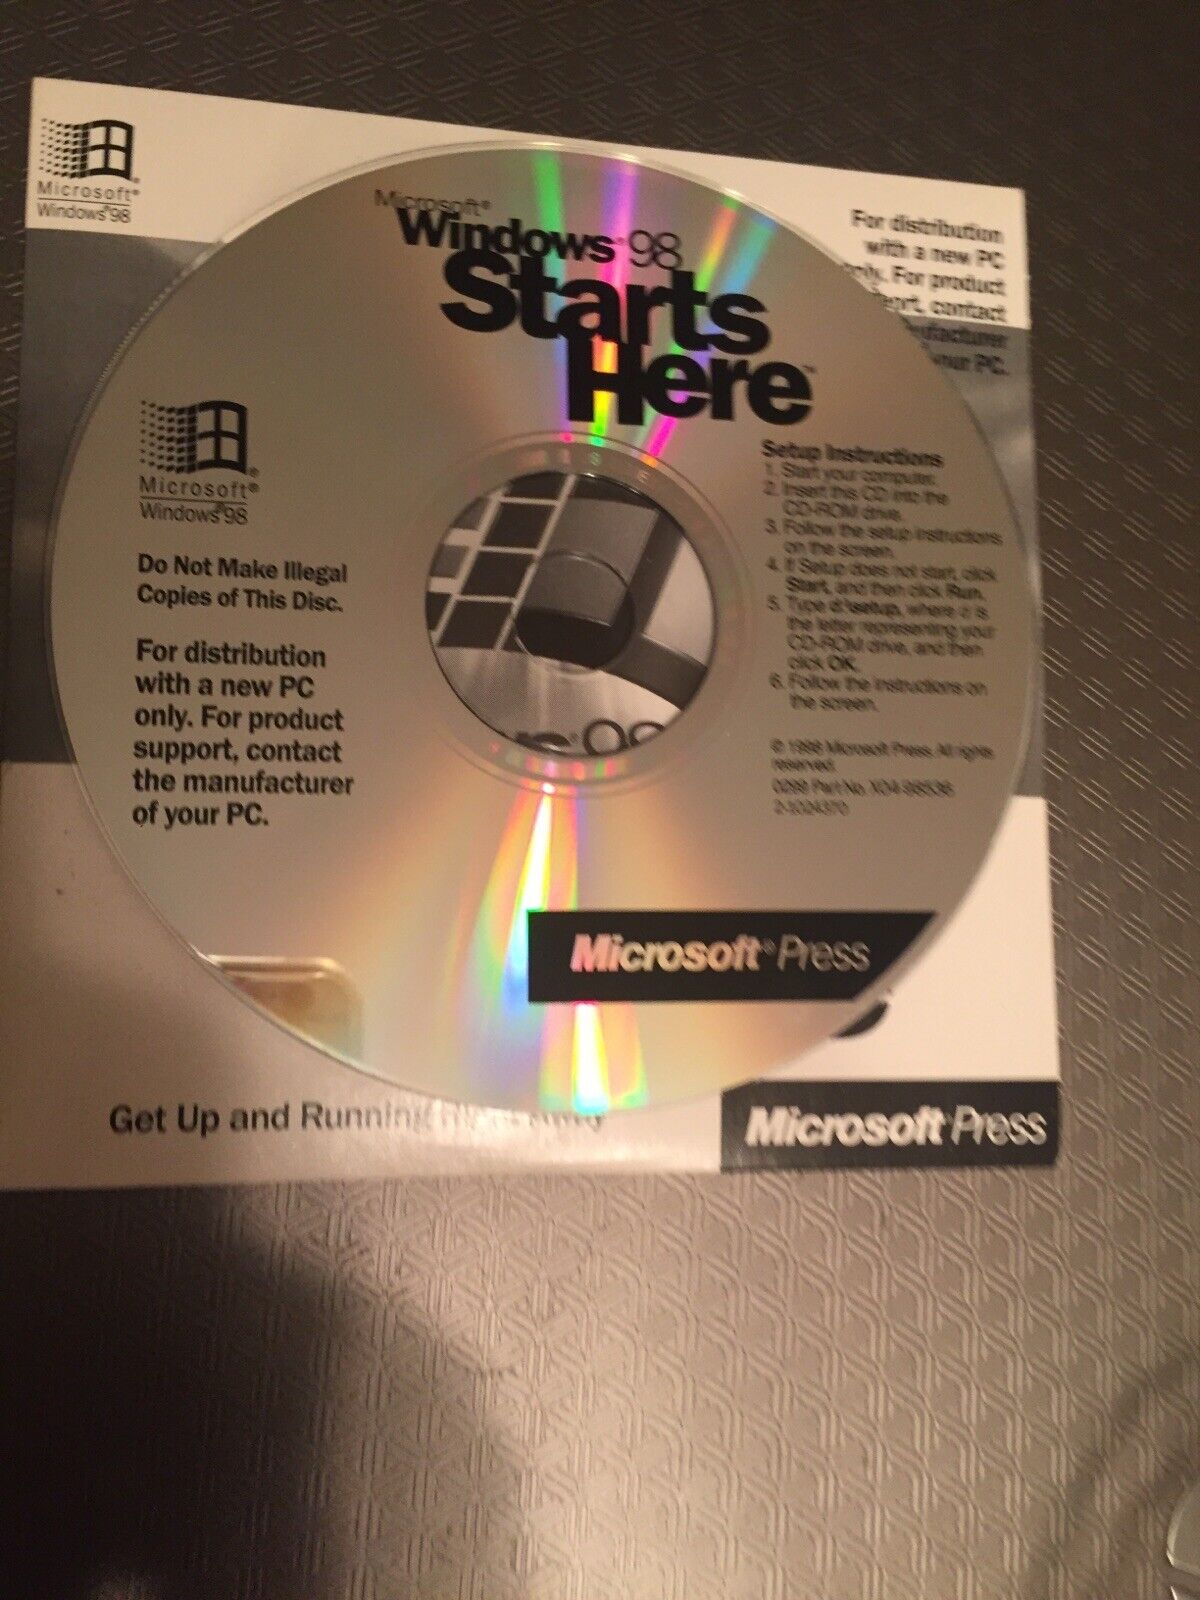 Microsoft Windows 98 Starts Here CD-ROM - 0288 PN X04-98536 Microsoft Press